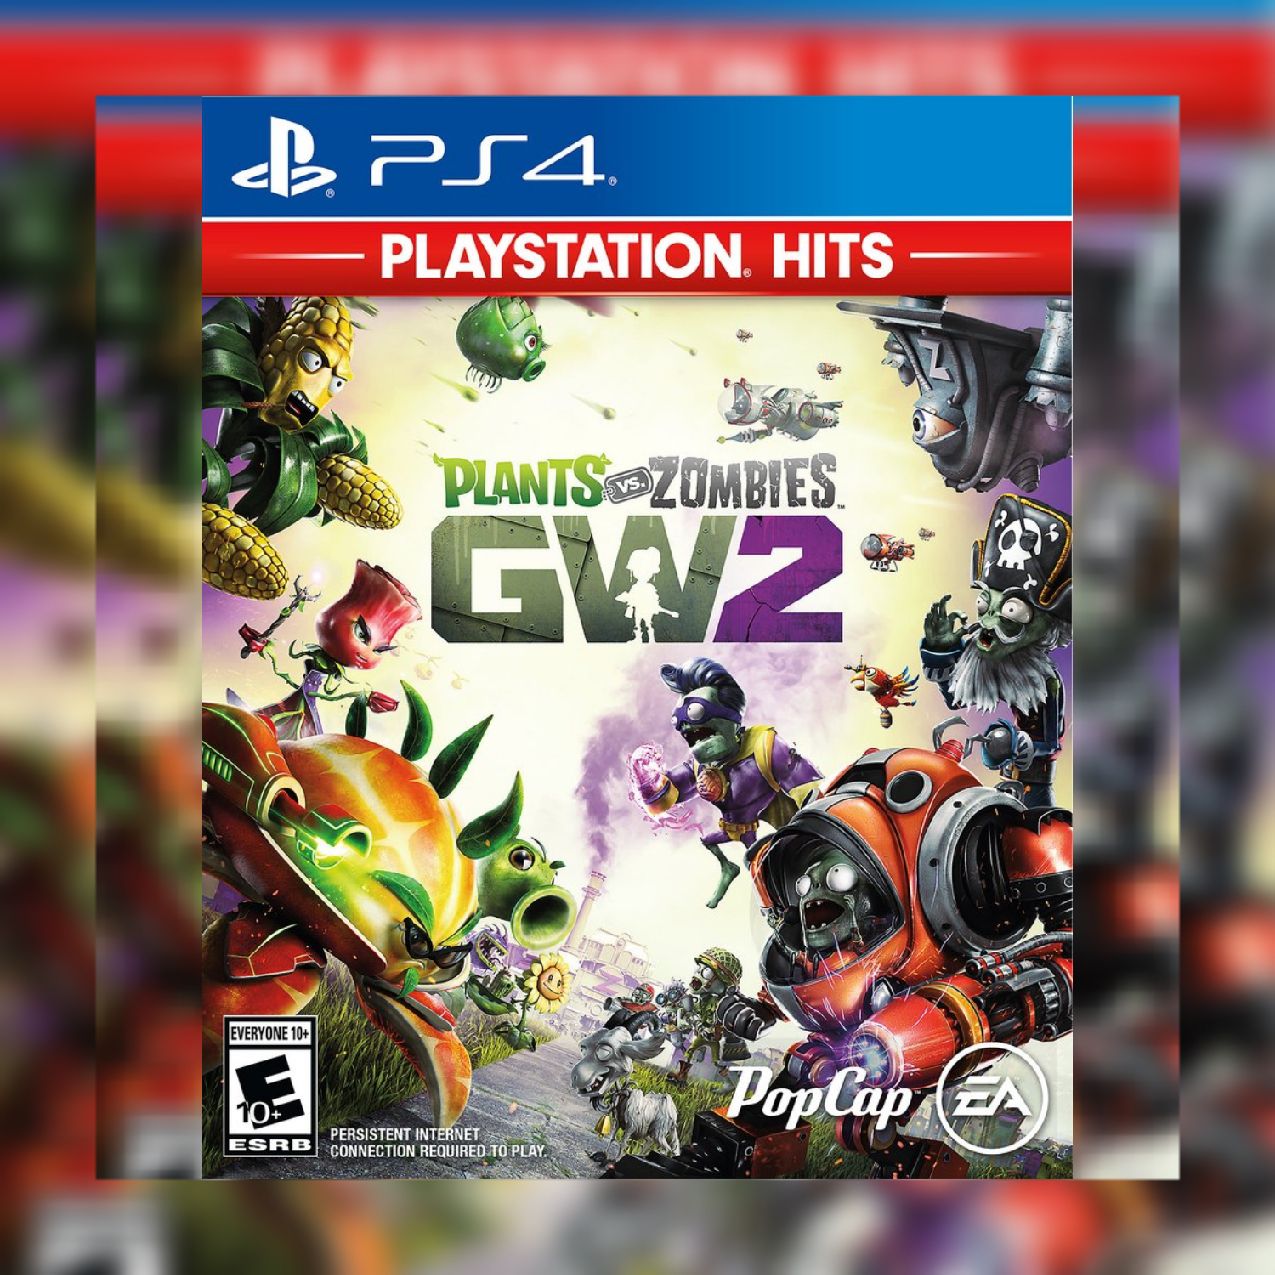 Plants vs Zombies: Garden Warfare 2 (PlayStation Hits) for PlayStation 4